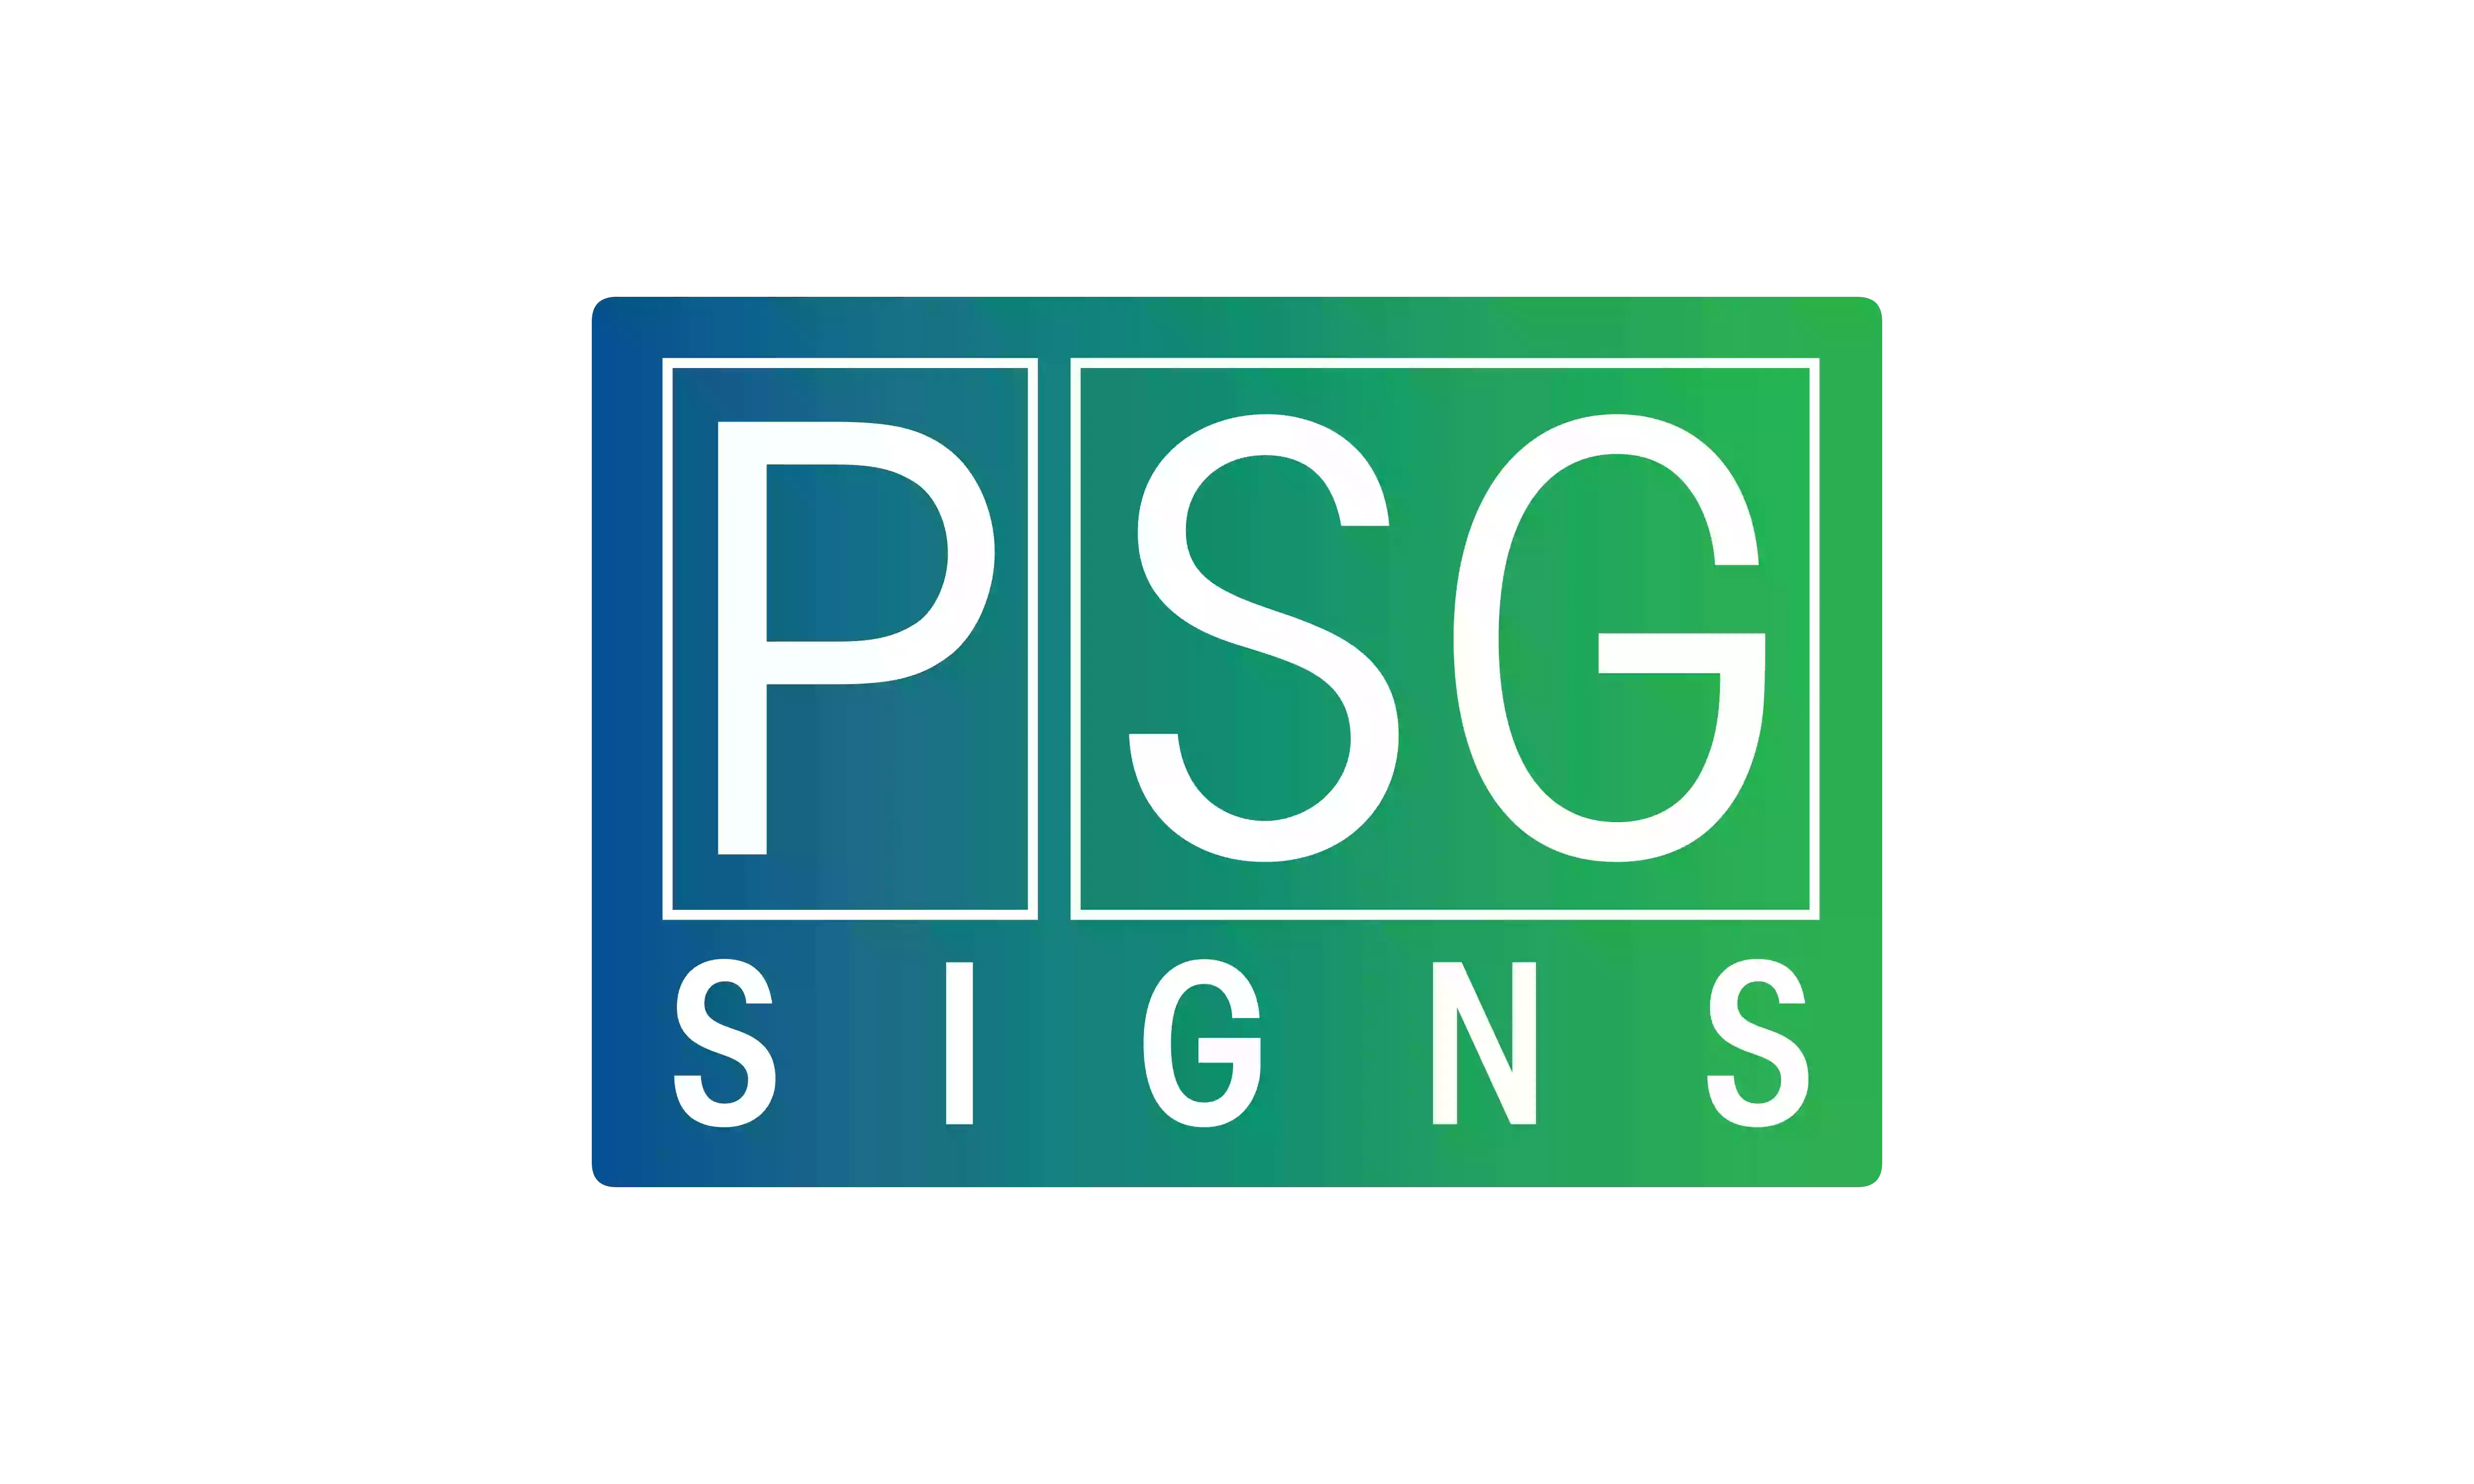 PSG Signs